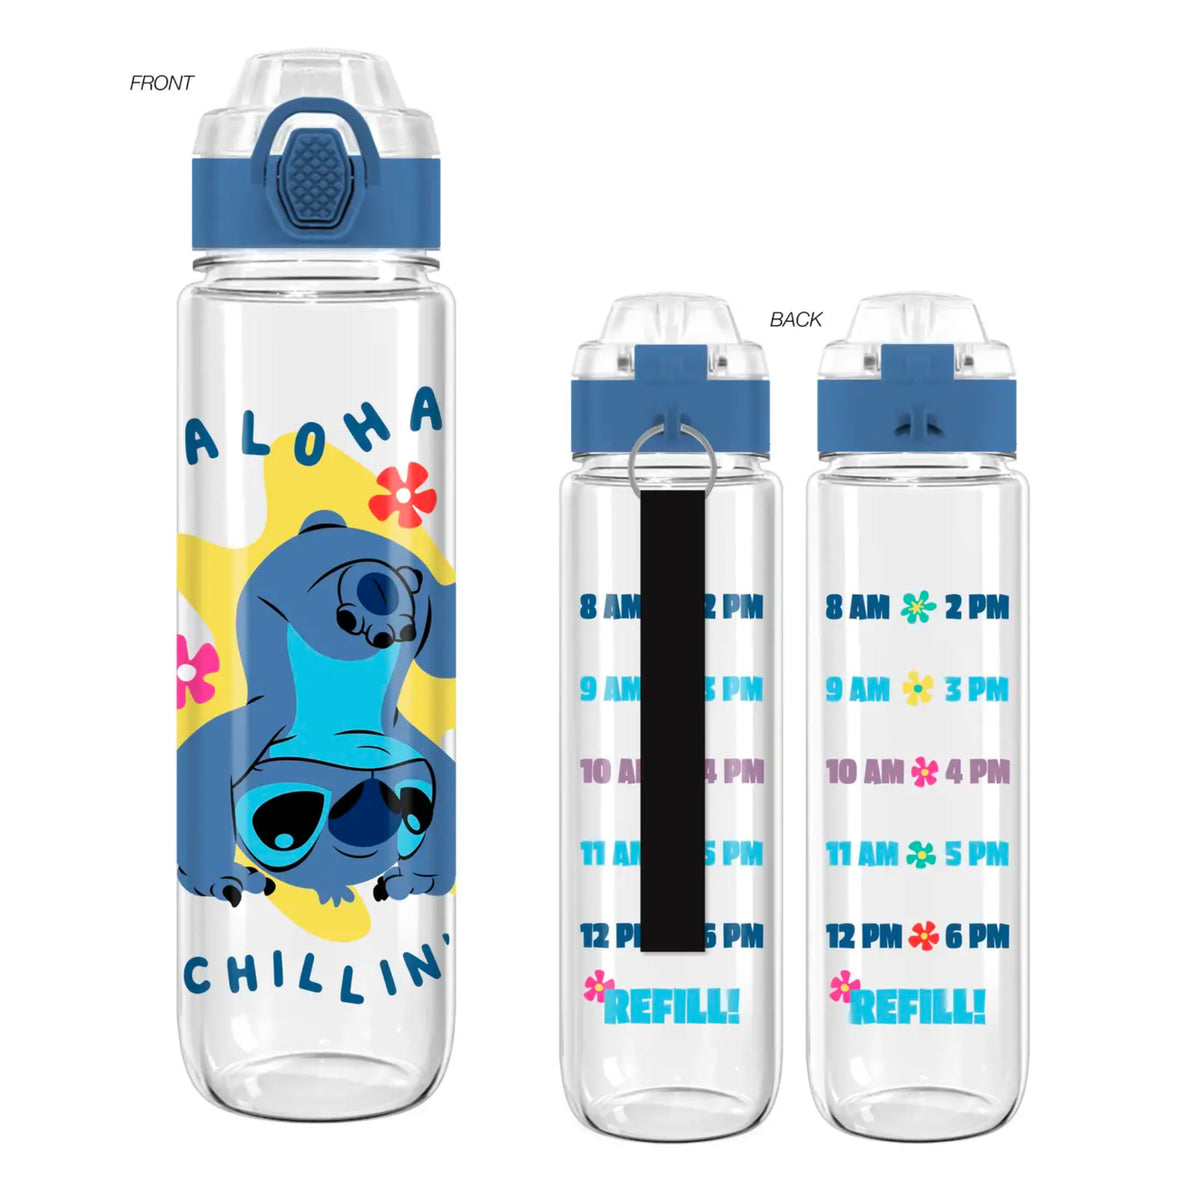 Lilo and Stitch Aloha Chillin 33oz. Plastic Water Bottle